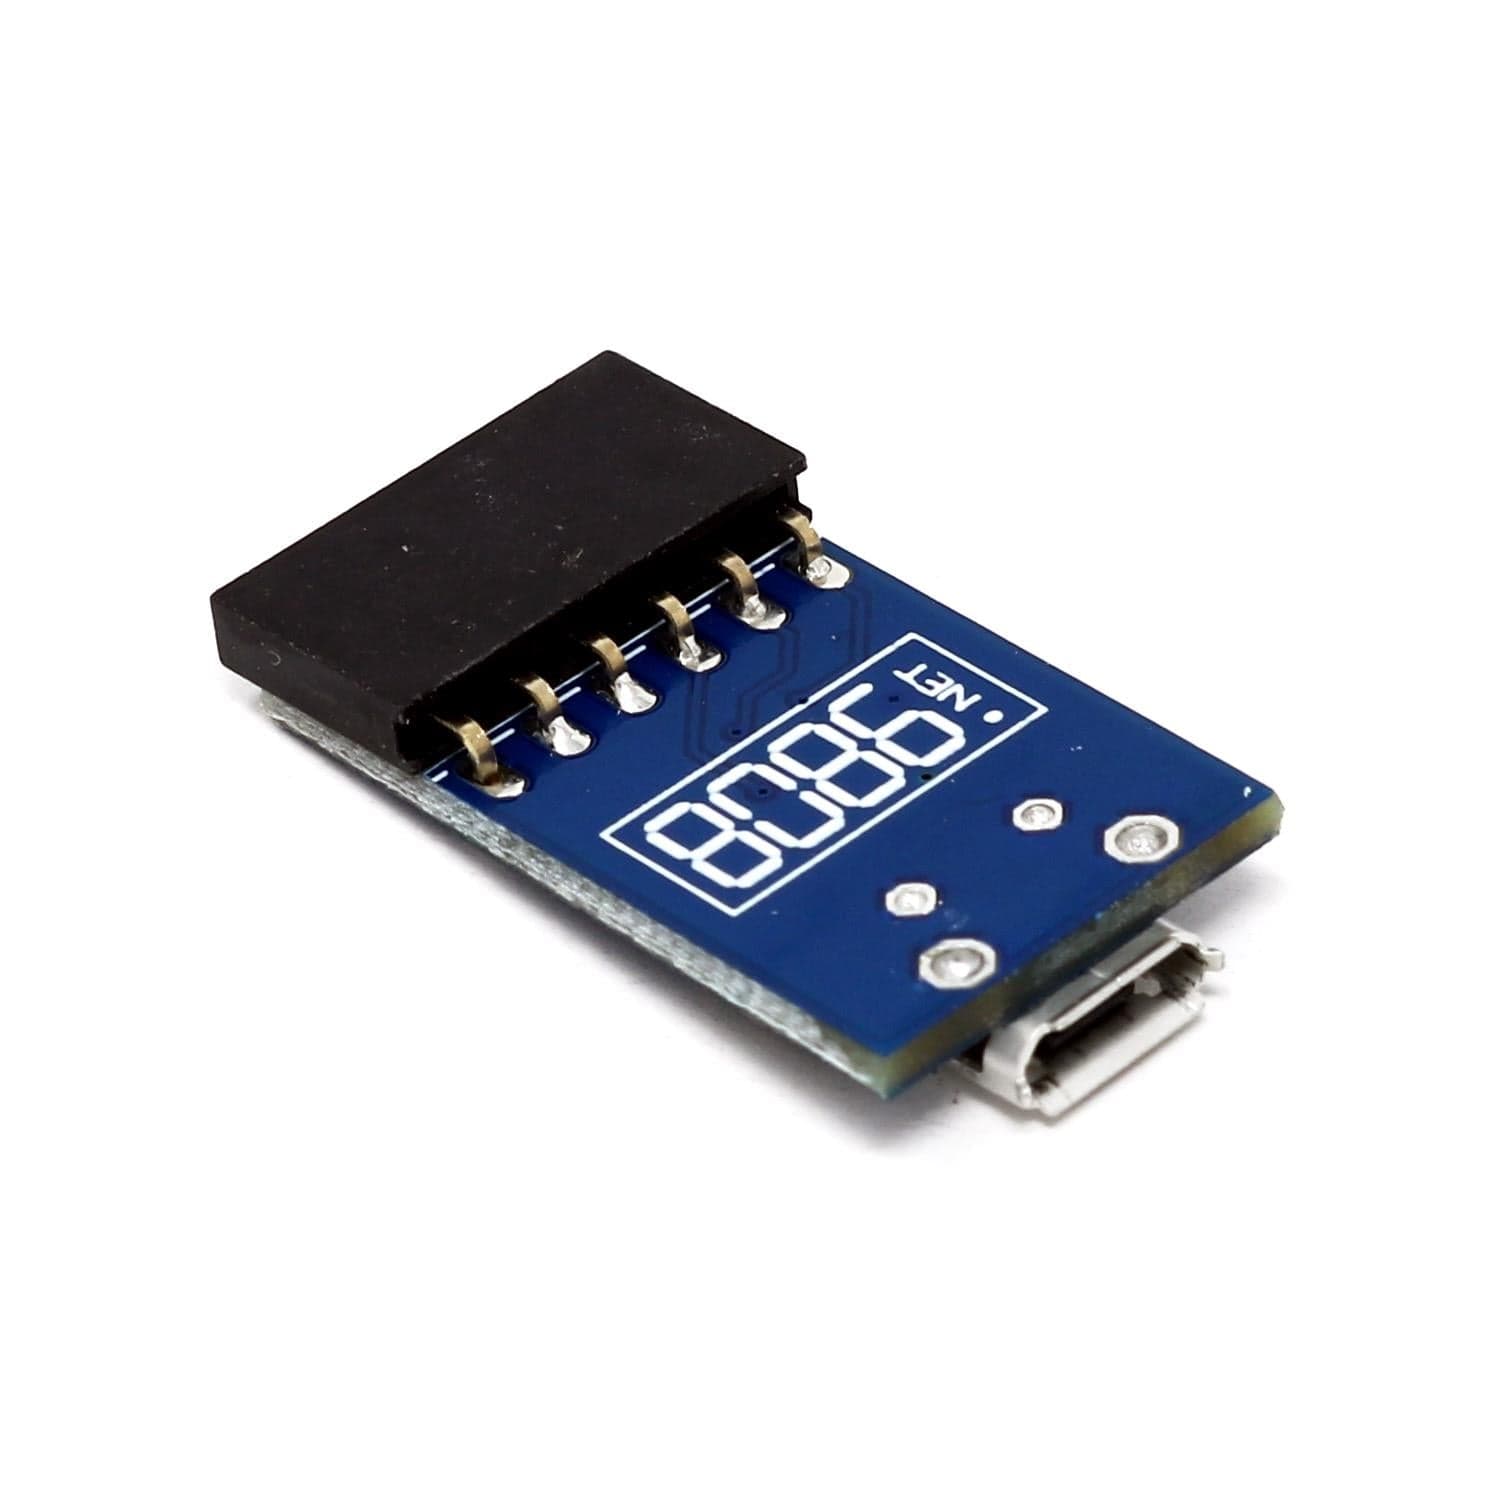 USB CDC Serial Adaptor (5v) - The Pi Hut